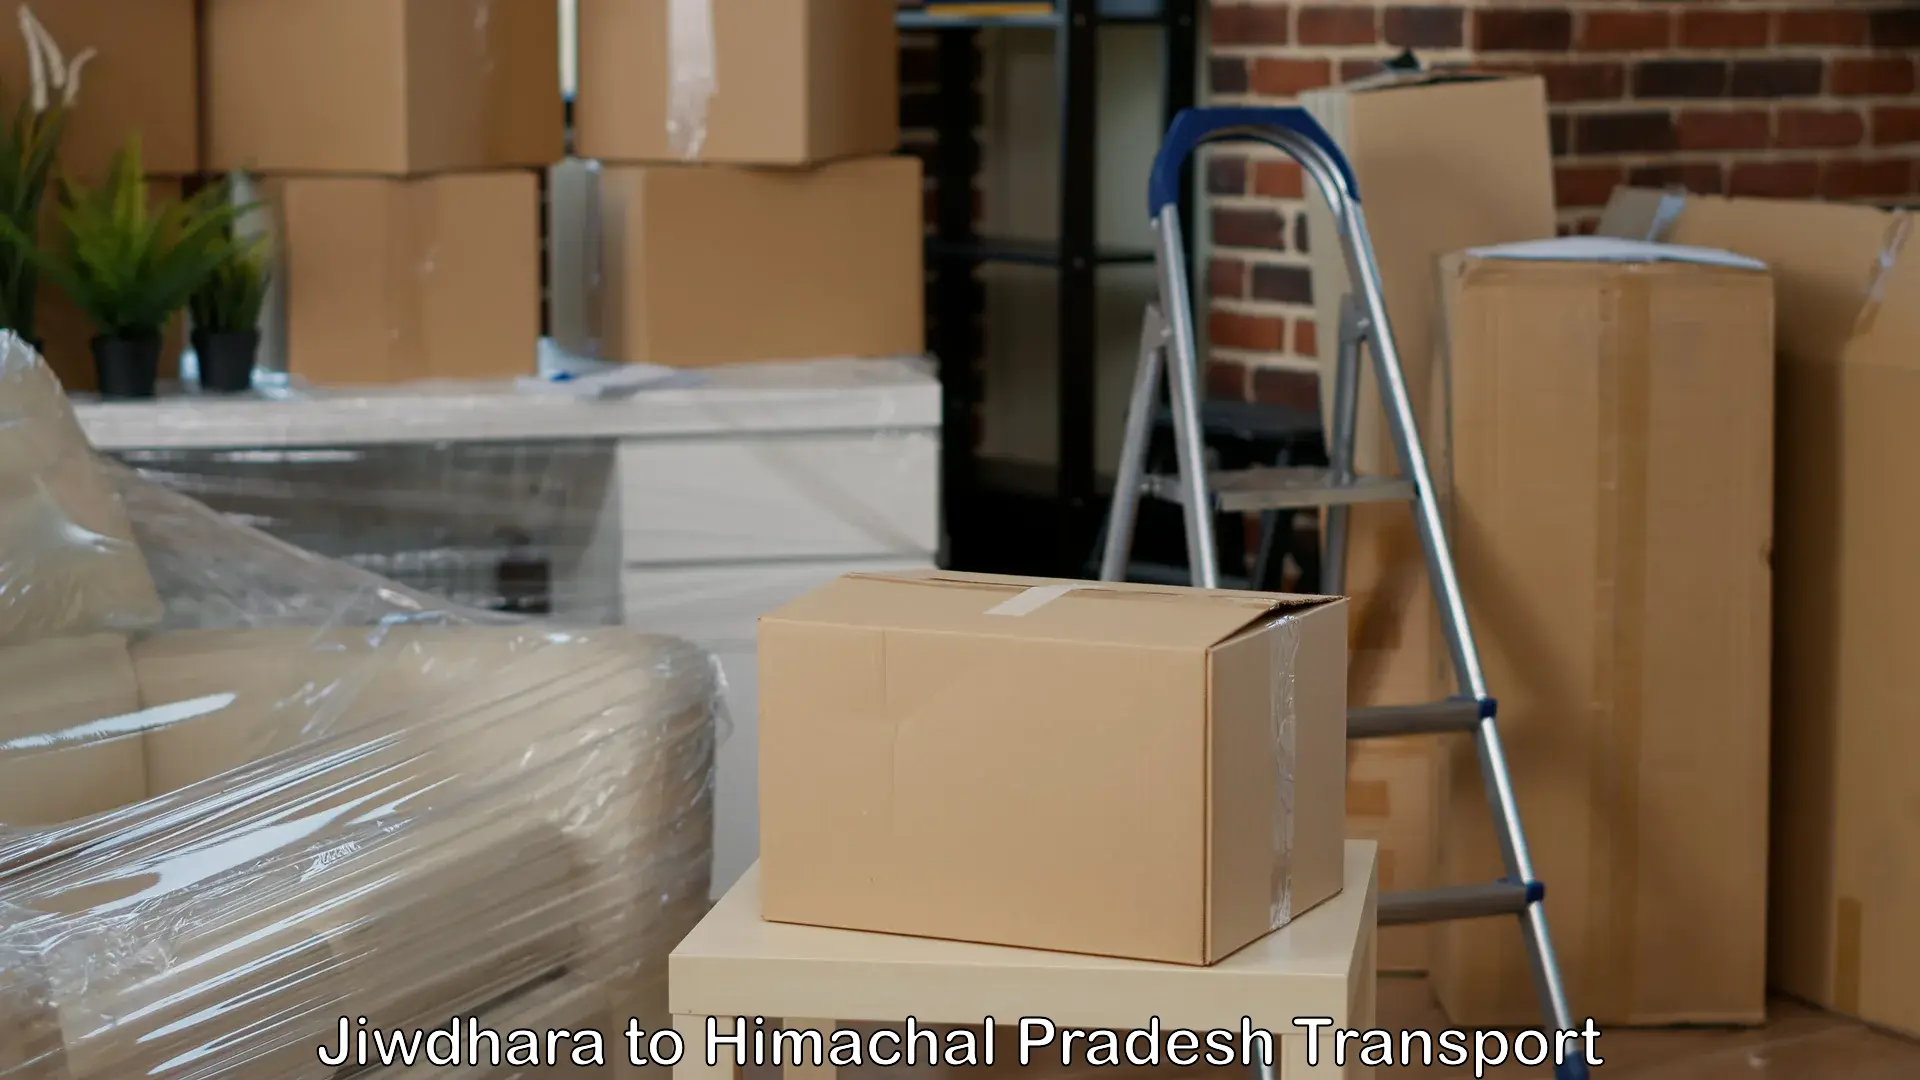 Sending bike to another city Jiwdhara to Rehan